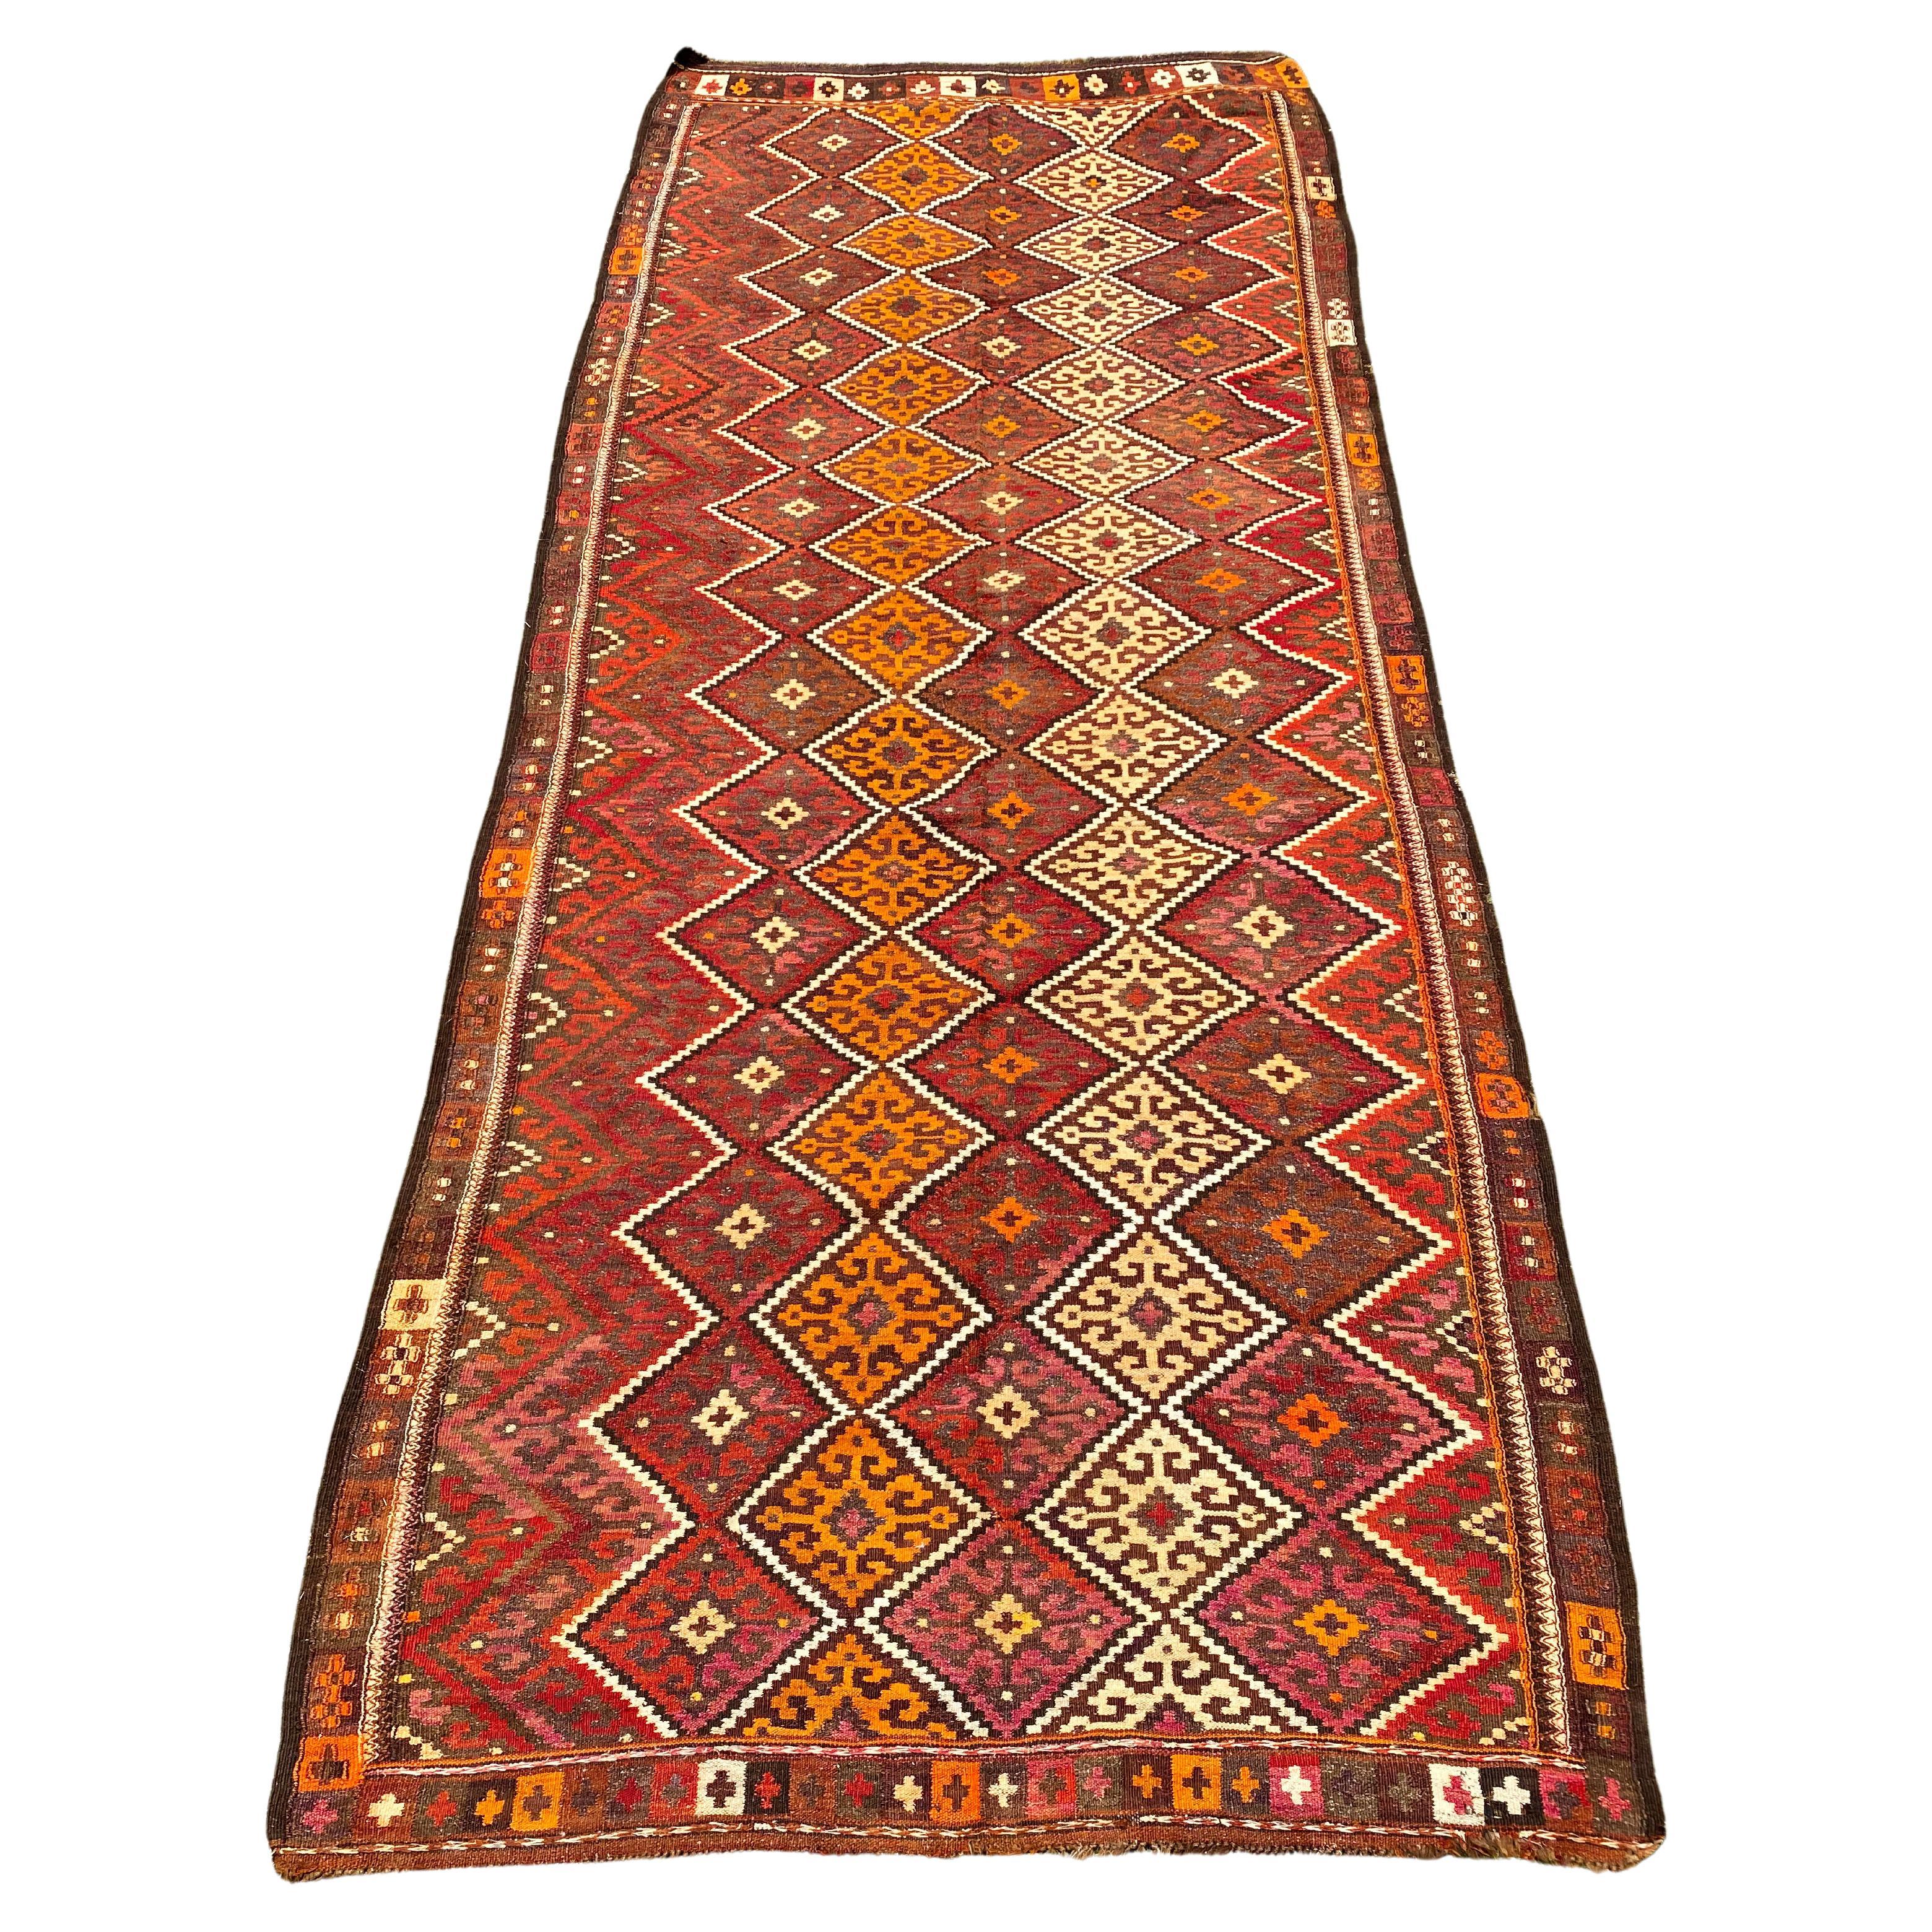 Uzbekistan Tartari Ranghi Kilim Rug from Wool, Early 20th Century